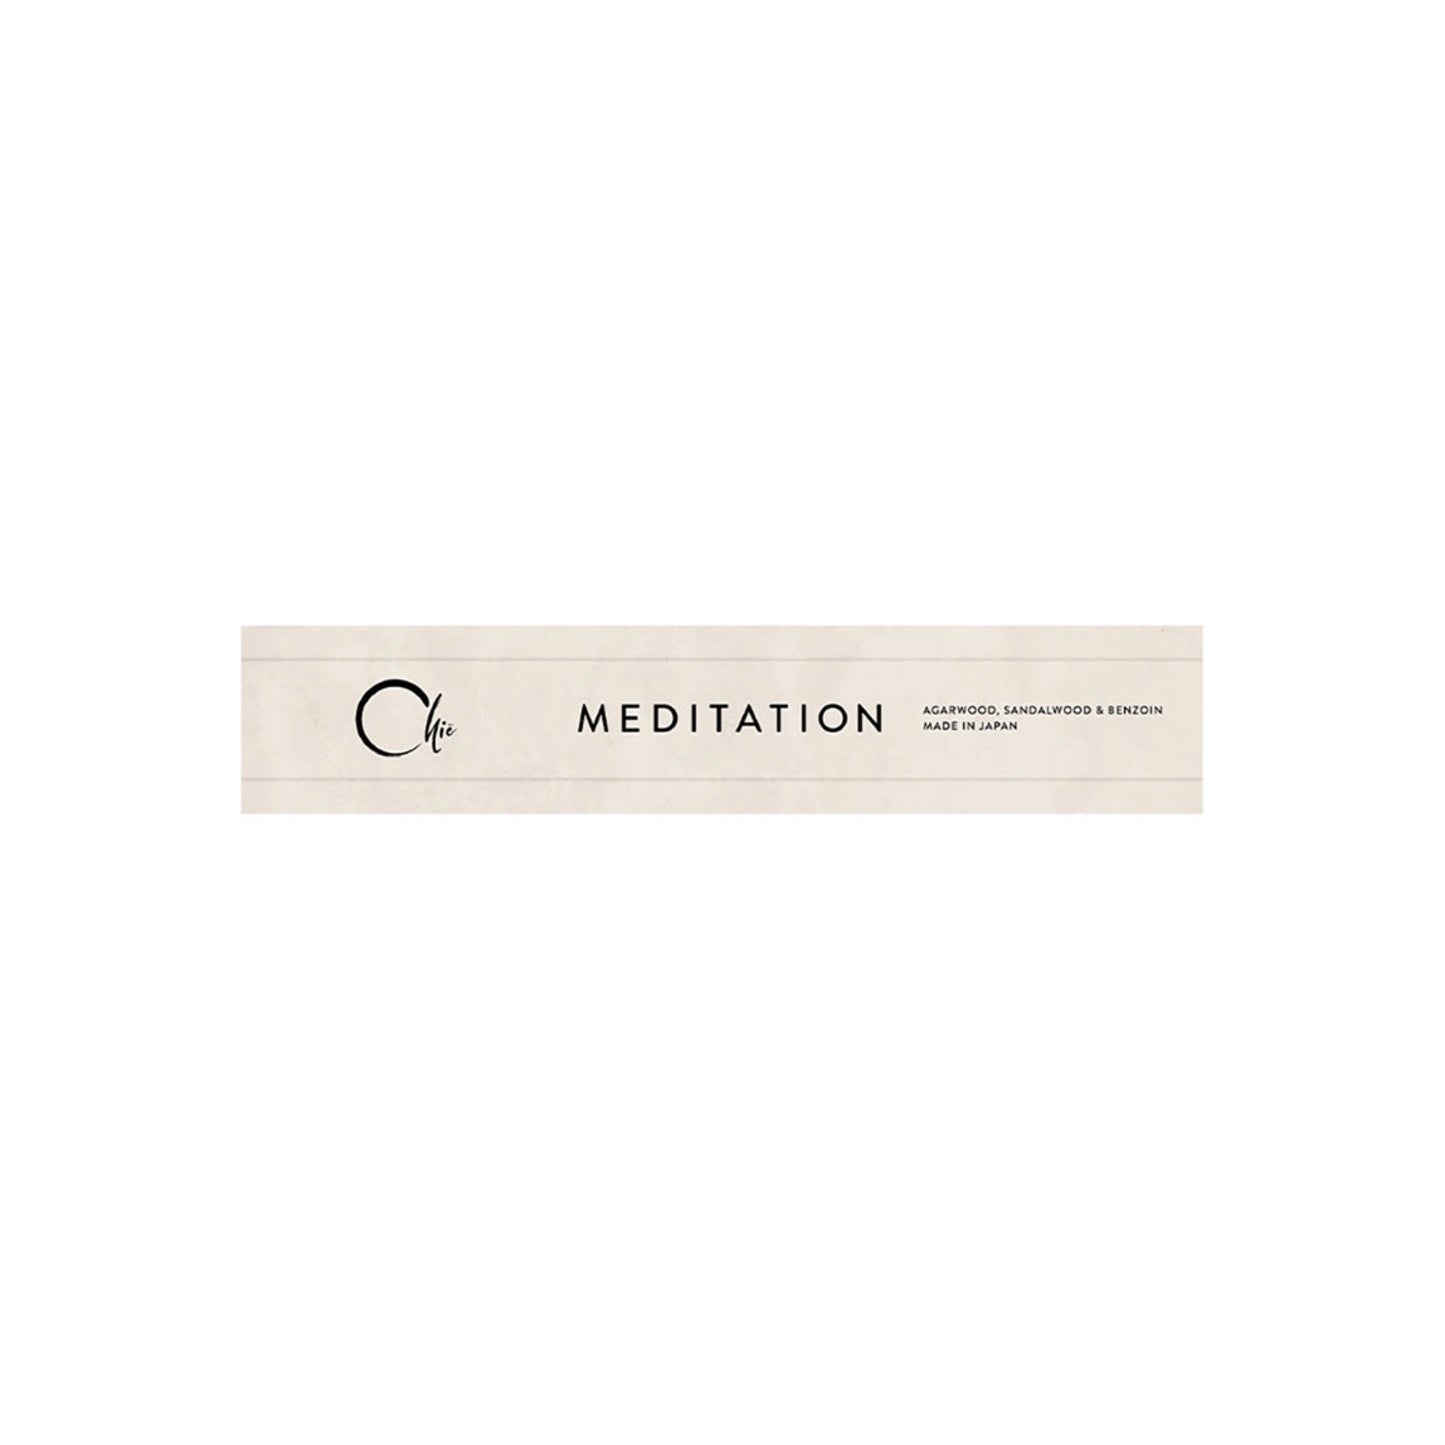 nippon kodo / chië incense - meditation